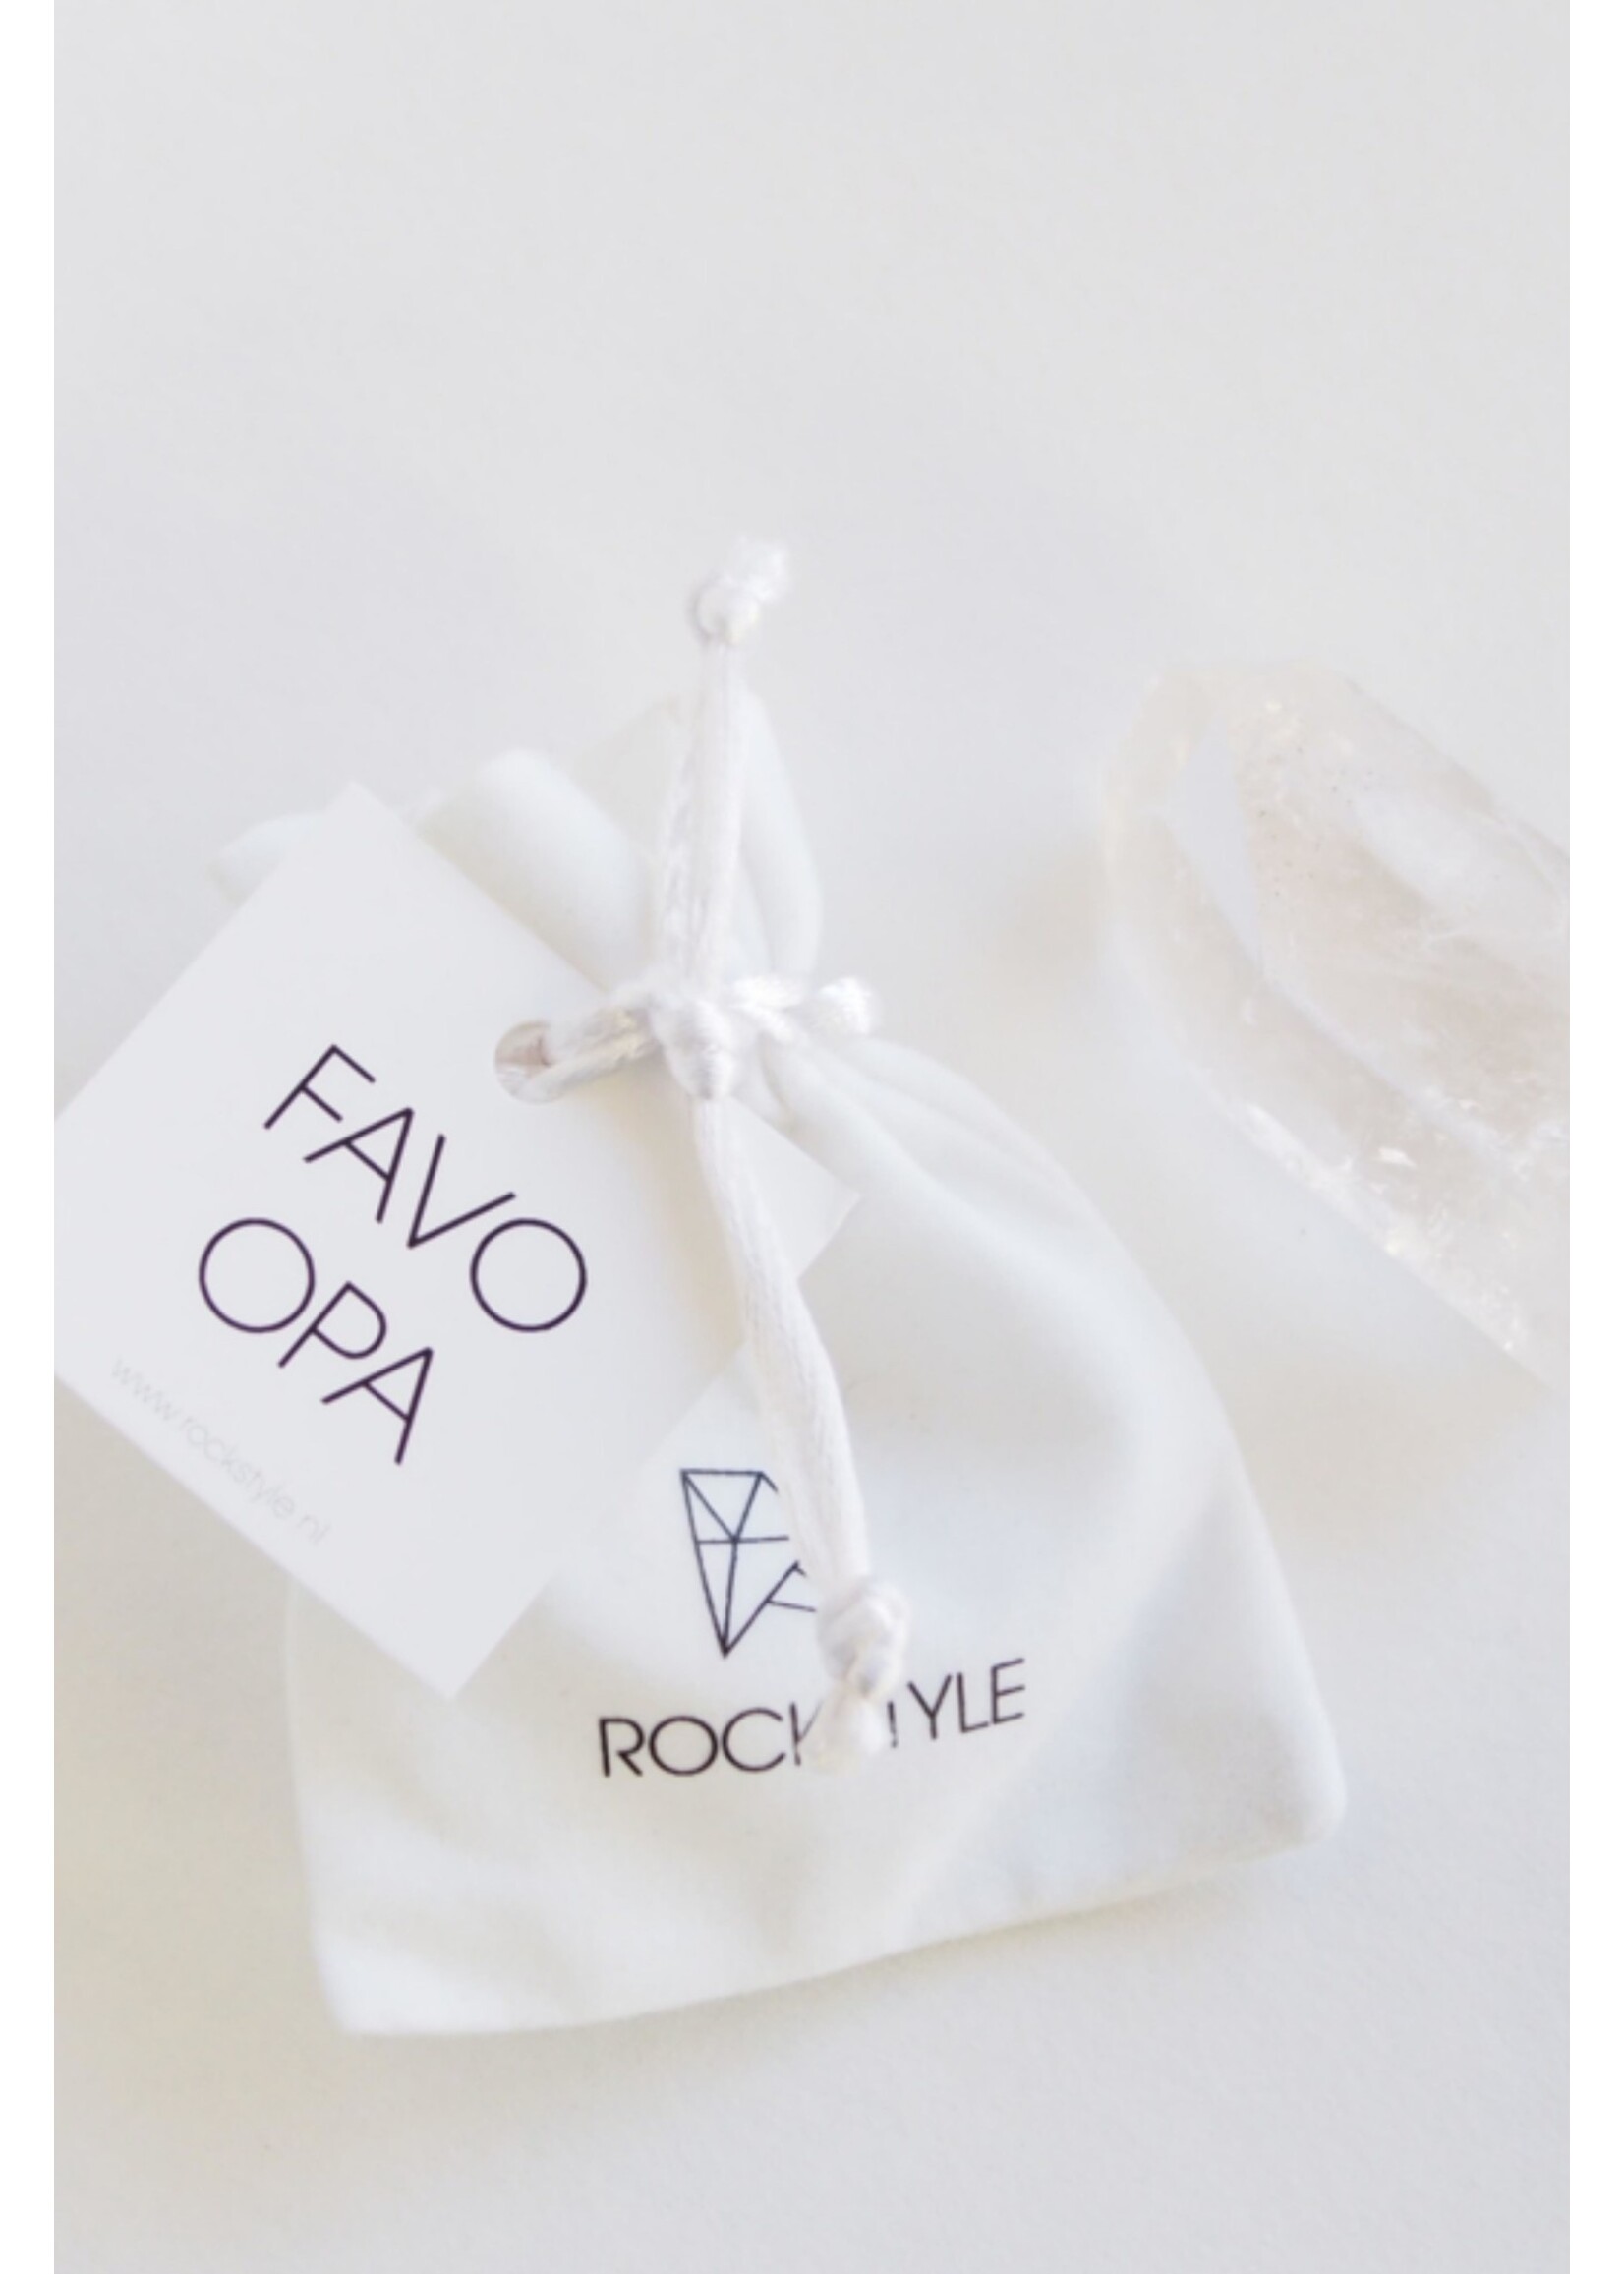 Rockstyle Bergkristal giftbag Favo Opa